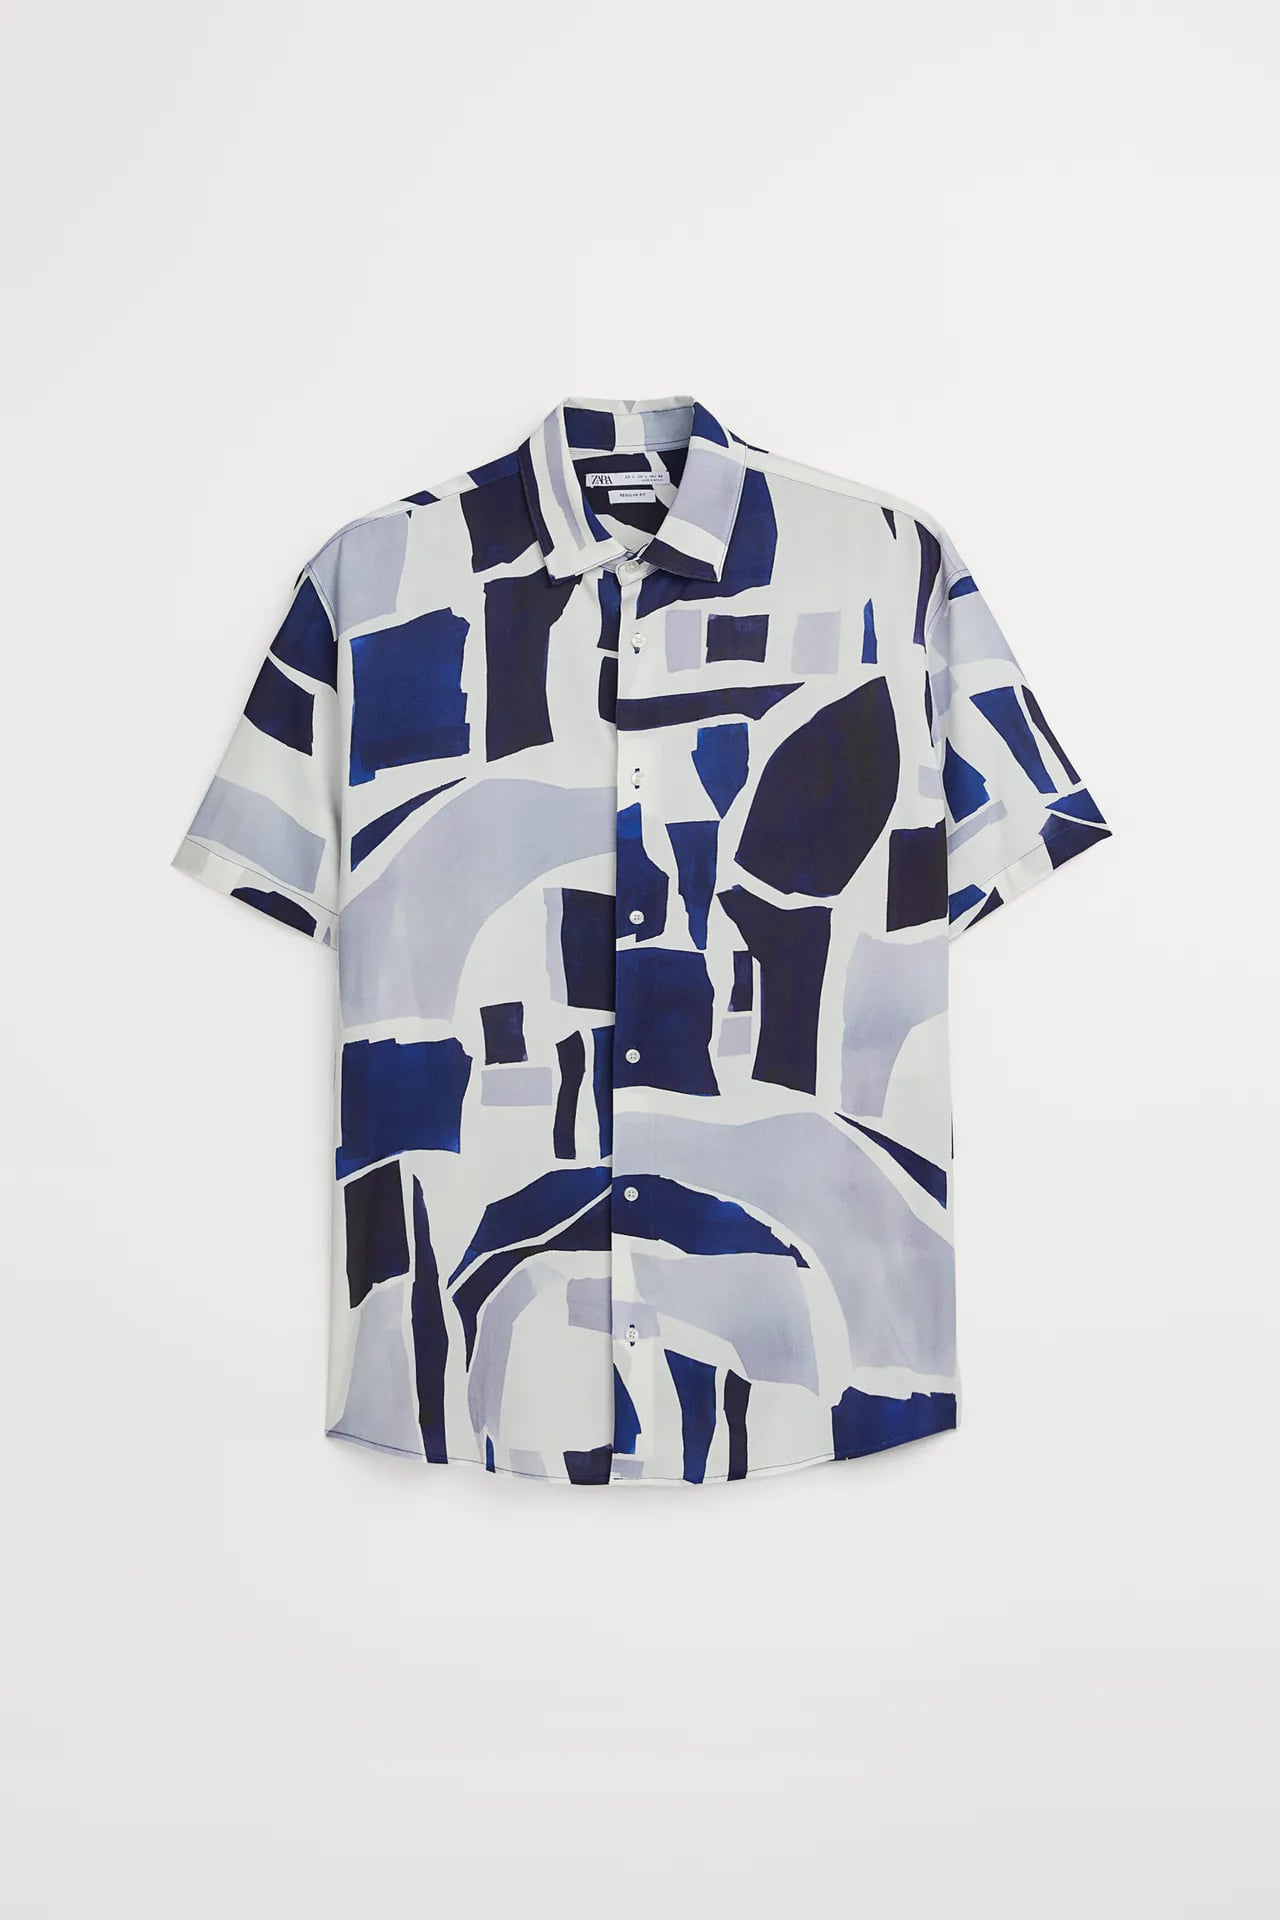 Zara Geometric Print Shirt  Nick Jonas Is the King of Abstract